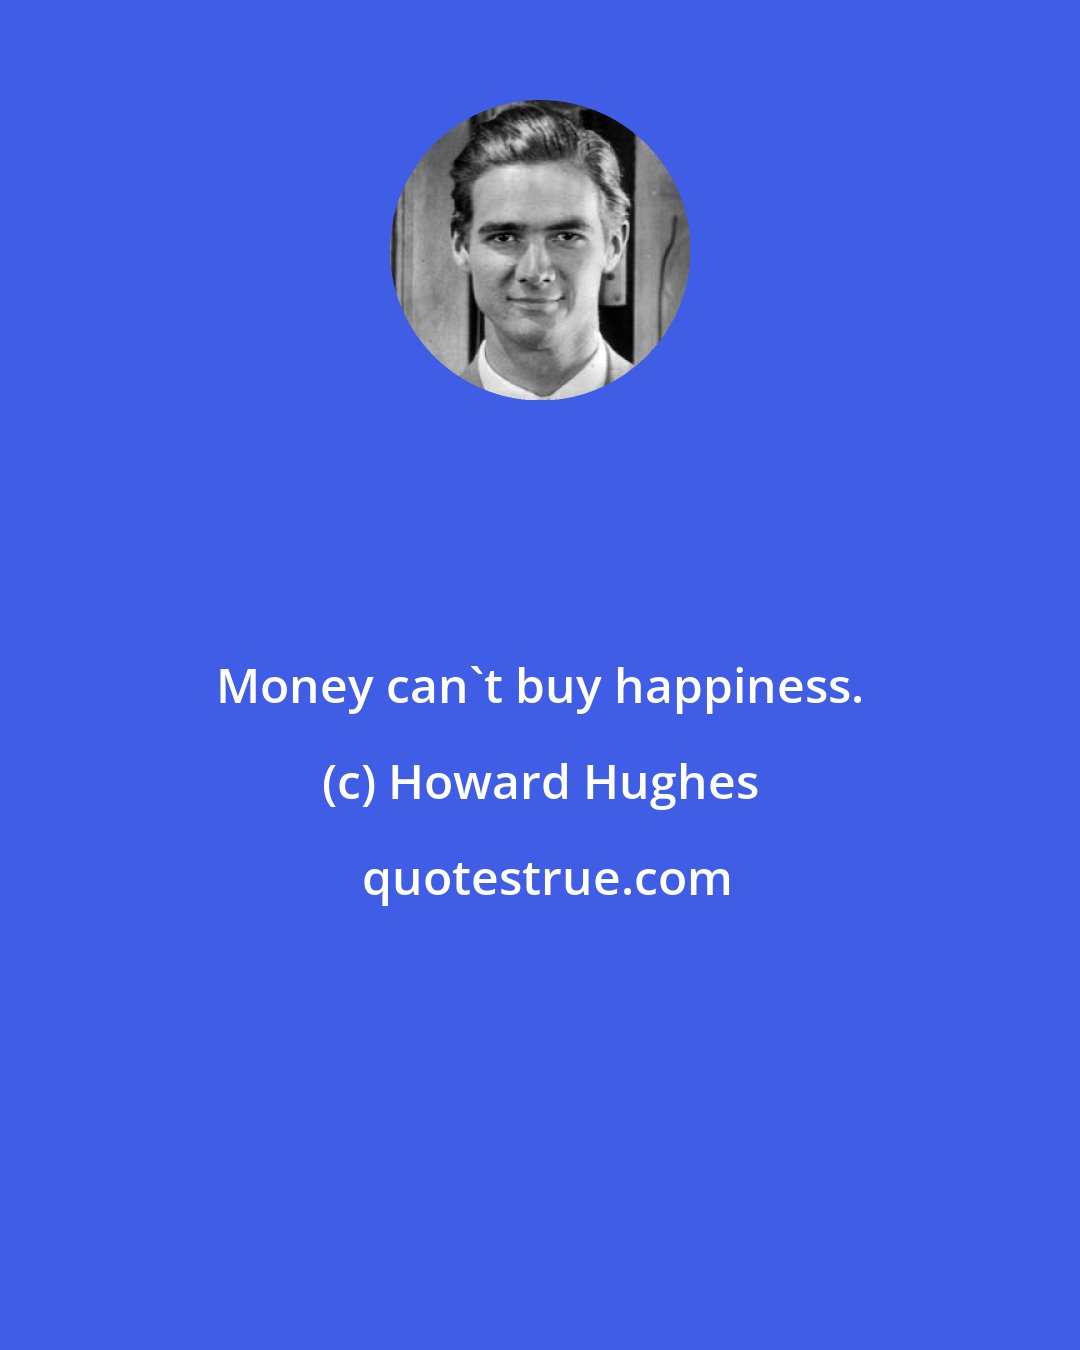 Howard Hughes: Money can't buy happiness.